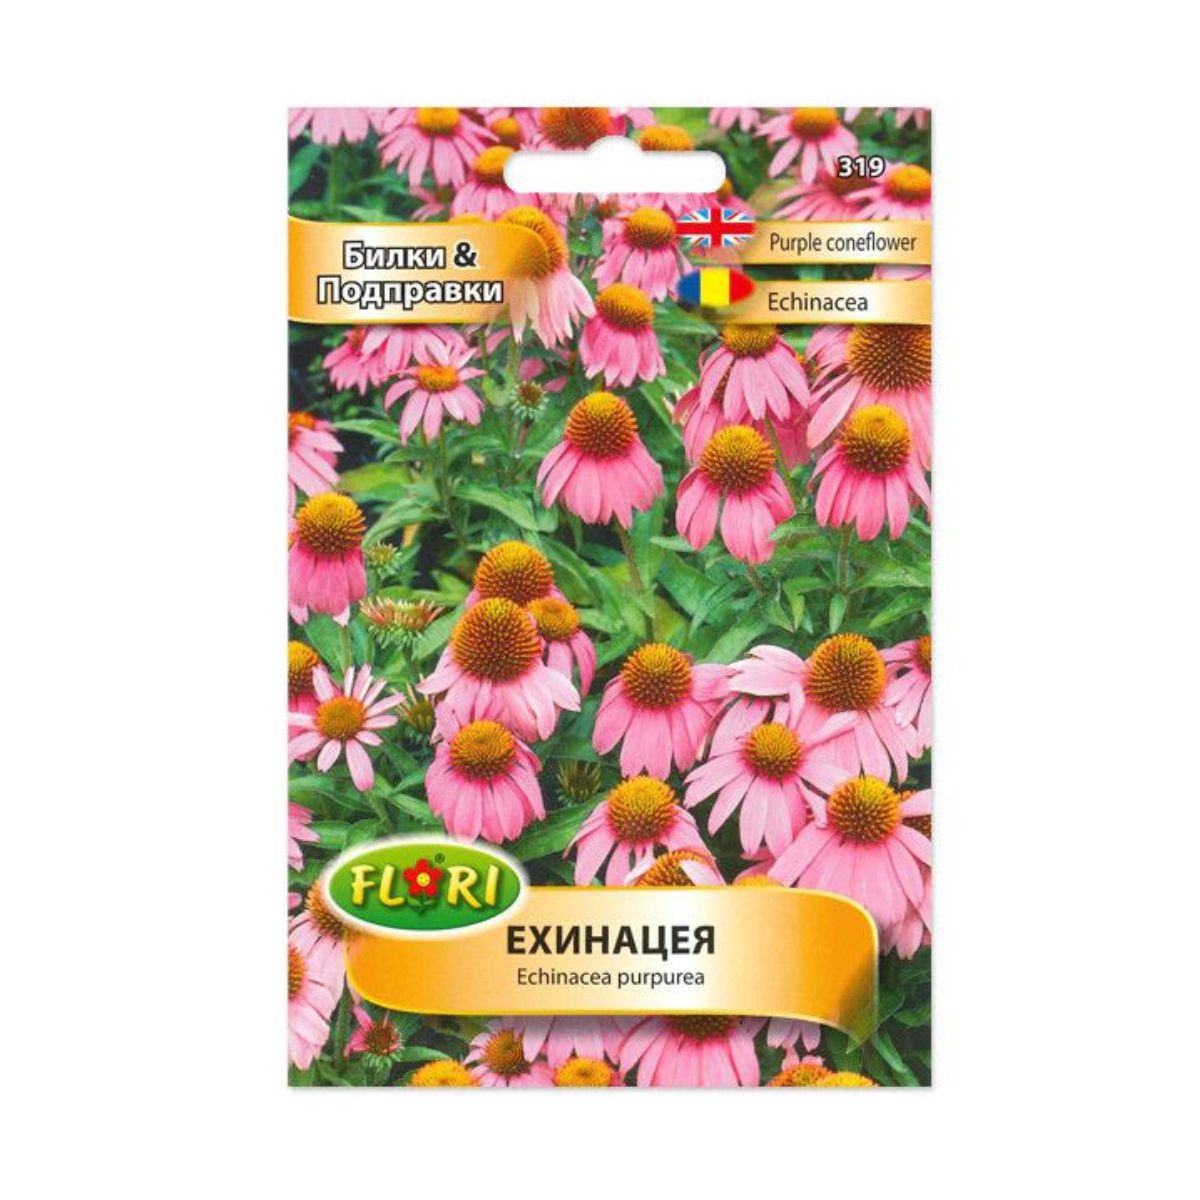 Seminte flori - Seminte de echinacea, 0.6 grame FLORIAN, hectarul.ro